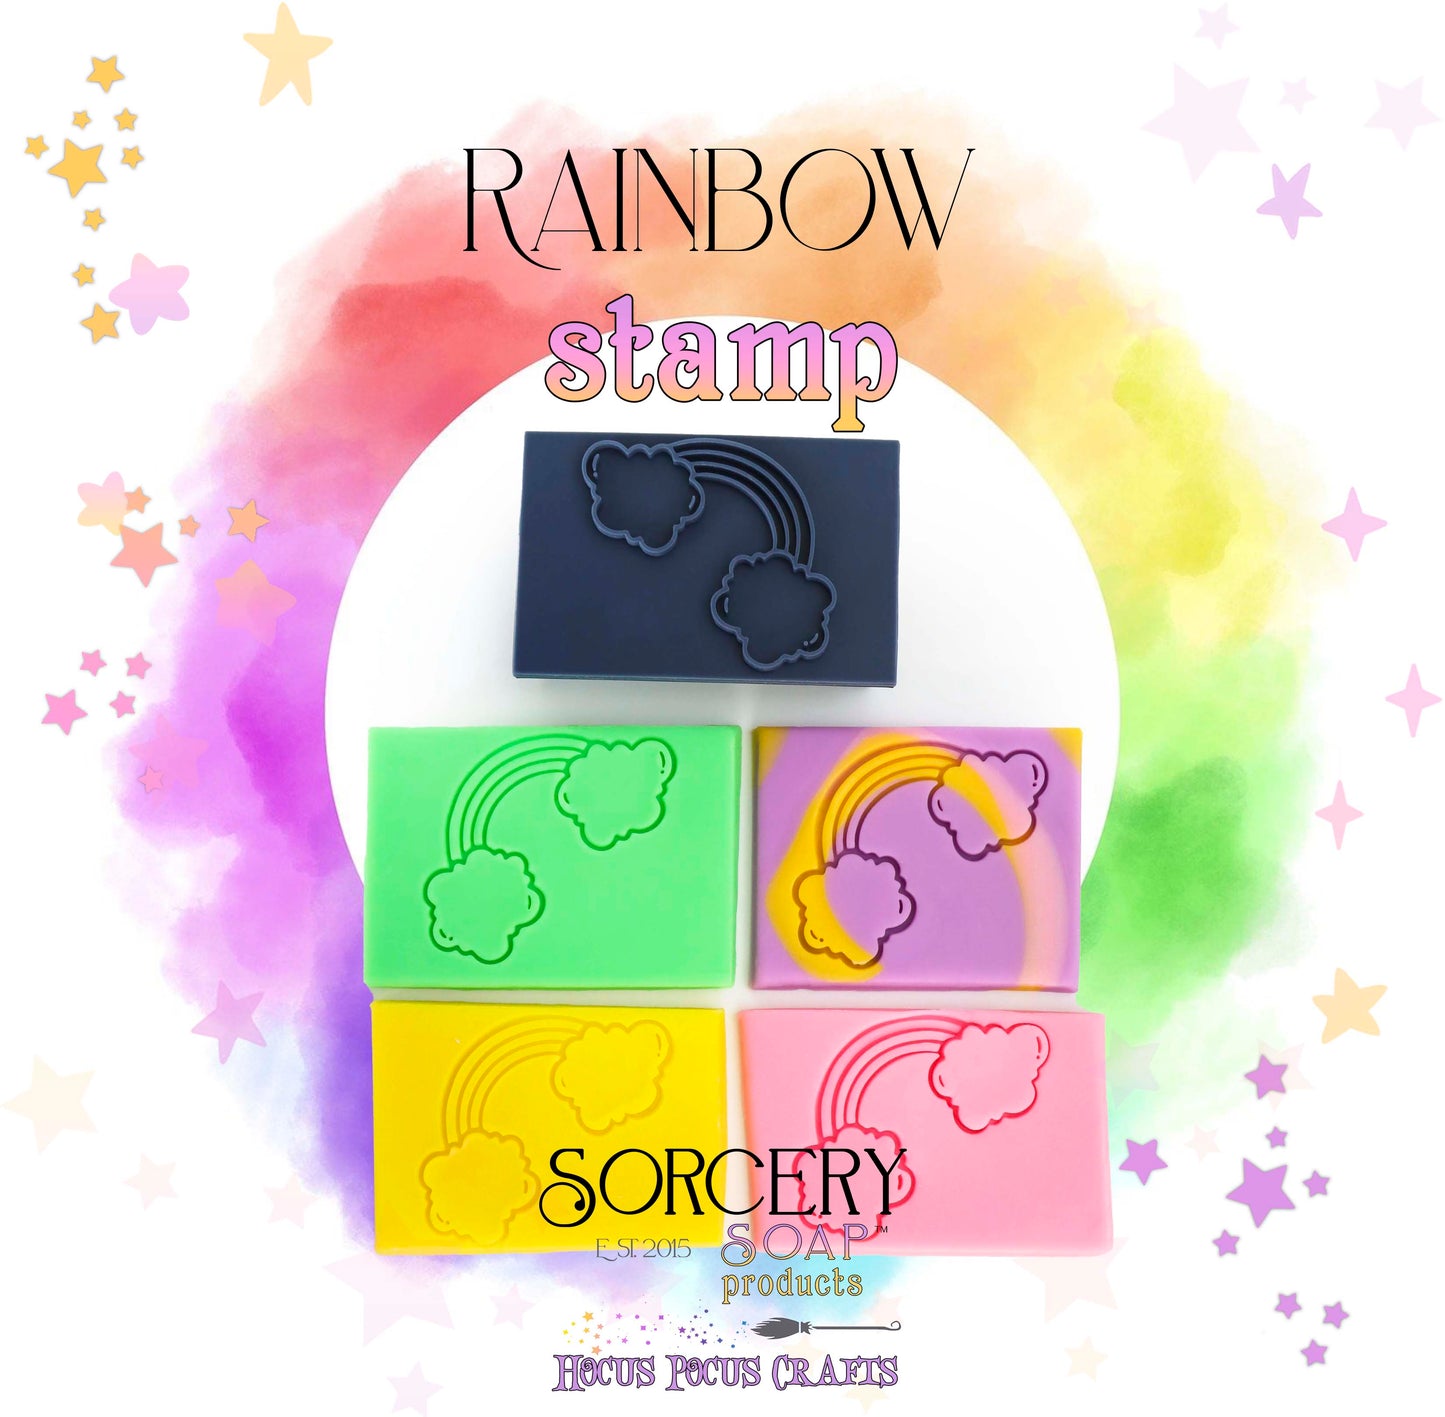 Party - Rainbow Stamp